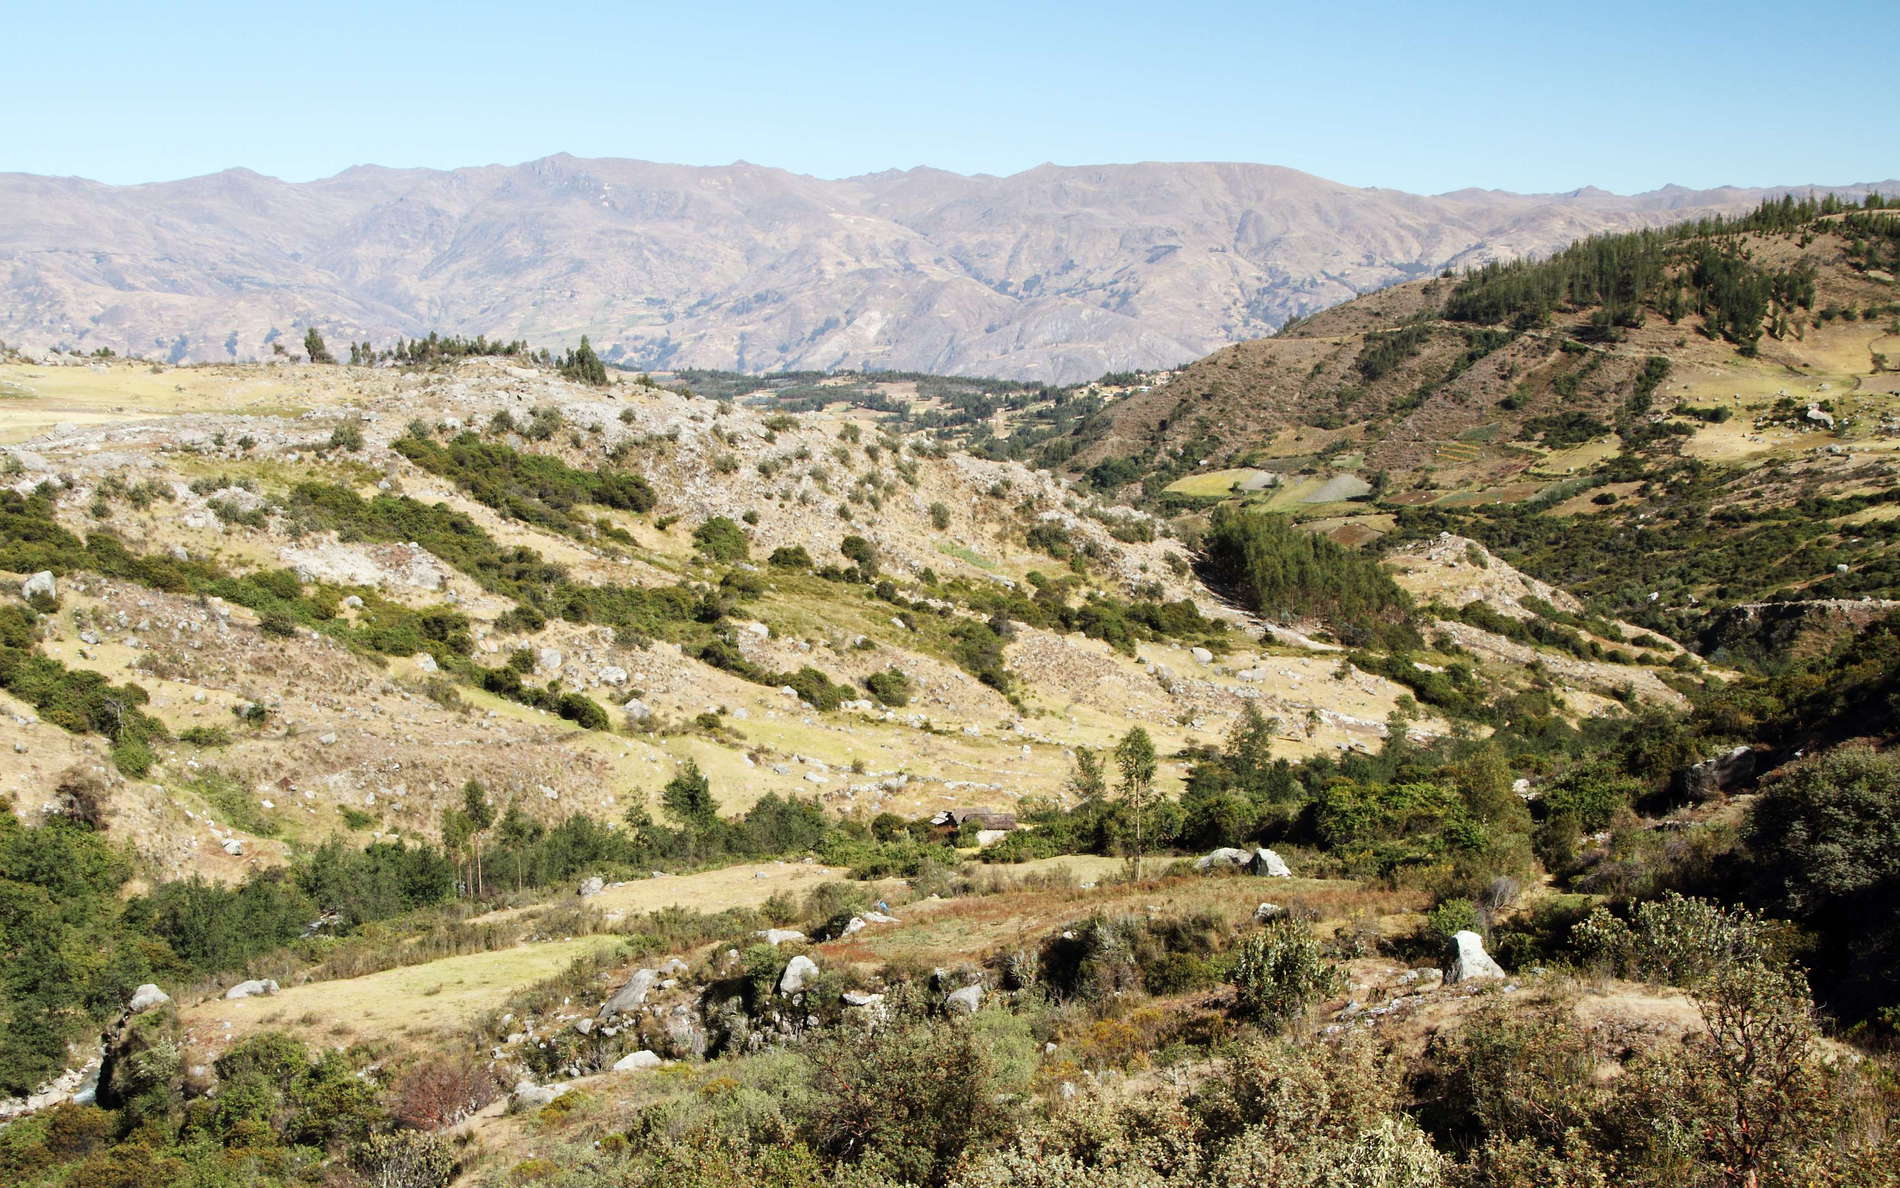 Quebrada Ishinca and Cordillera Negra